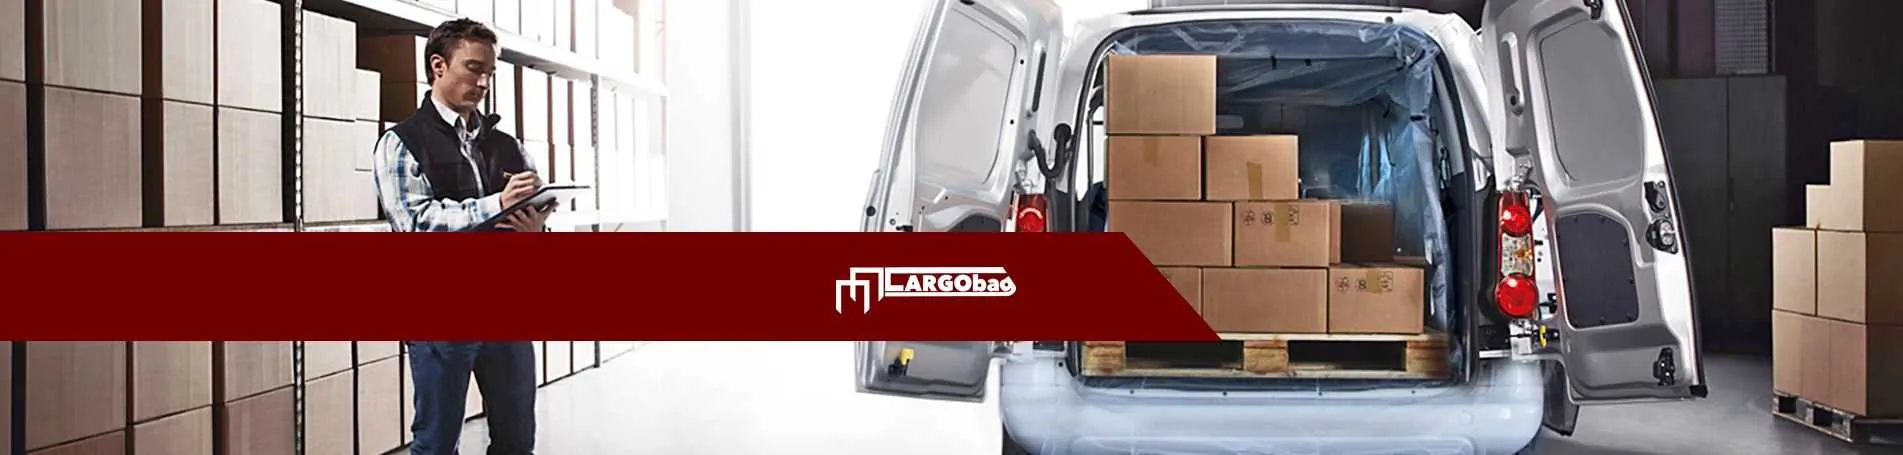 CargoBag, nuevo cliente de Lifting Group Valencia